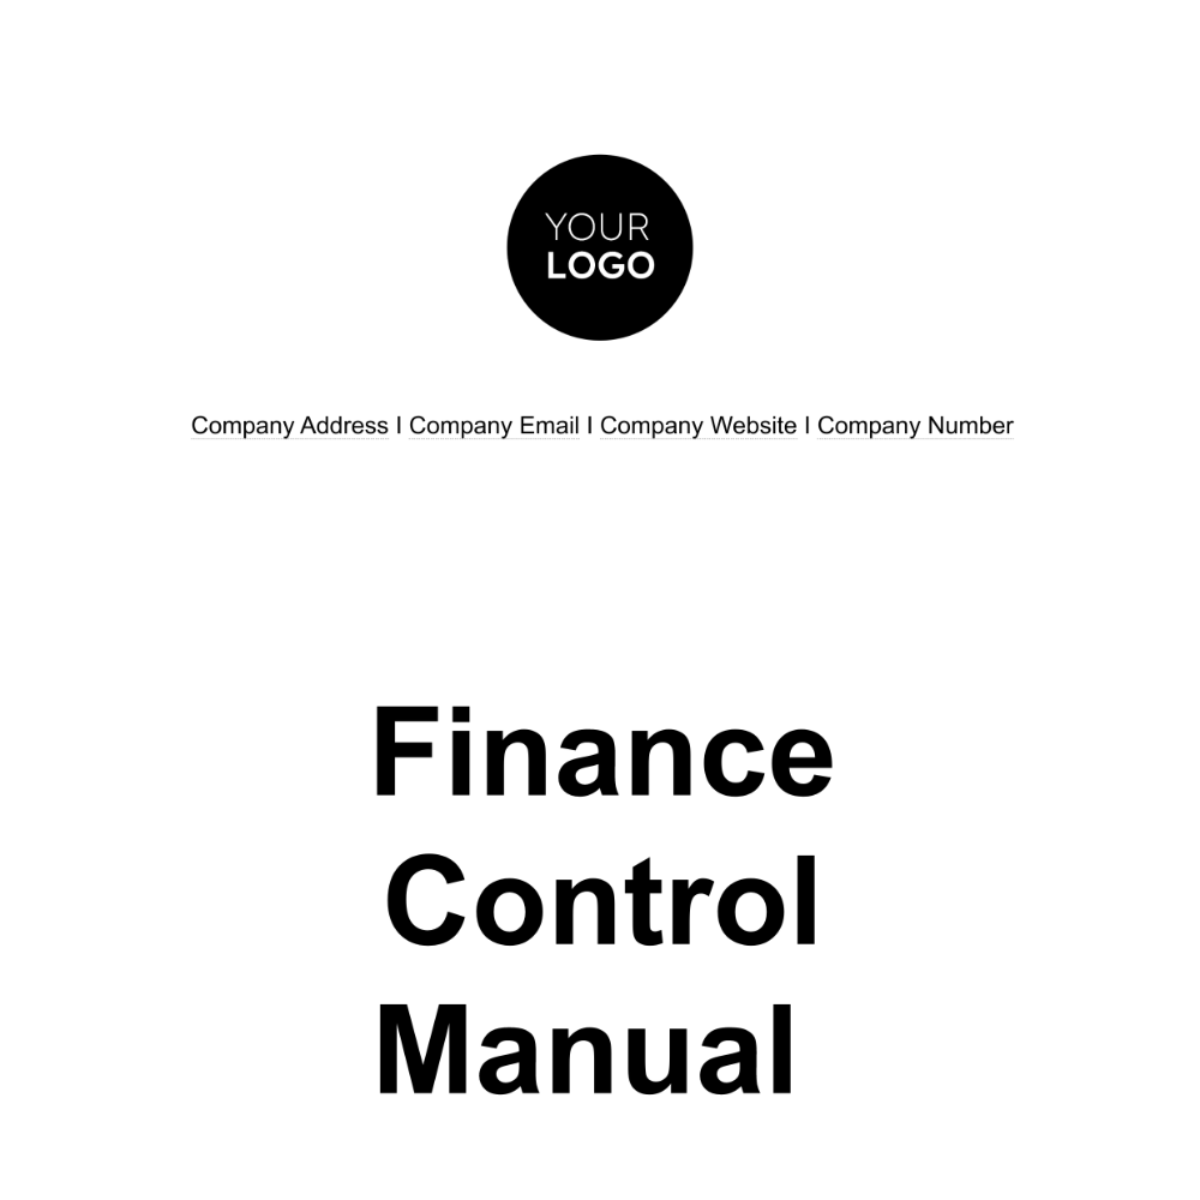 Free Finance Control Manual Template